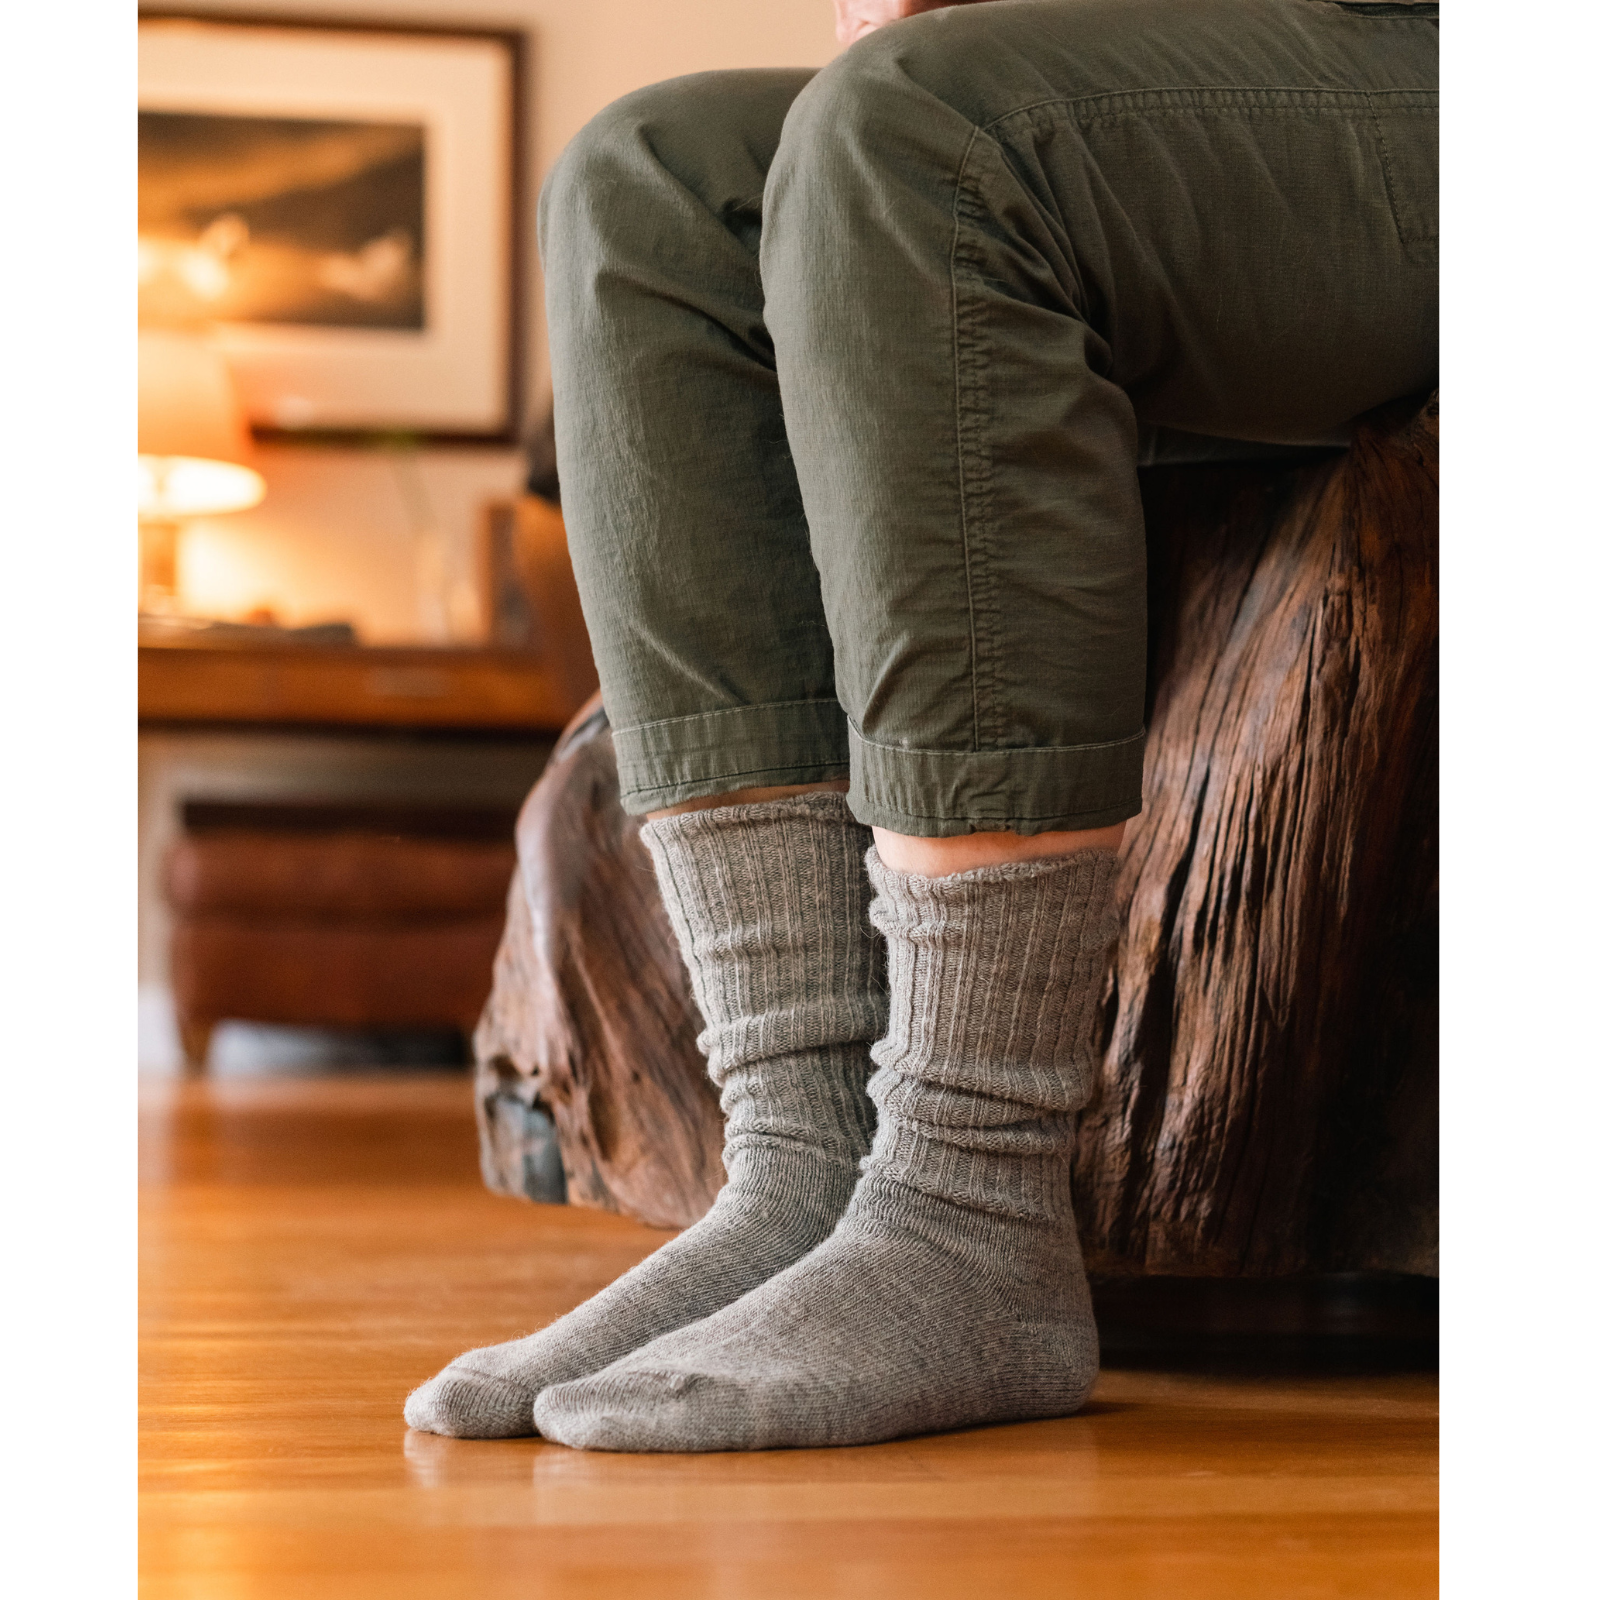 Classic Alpaca Casual women's and men's crew socks in heather gray worn by model inside